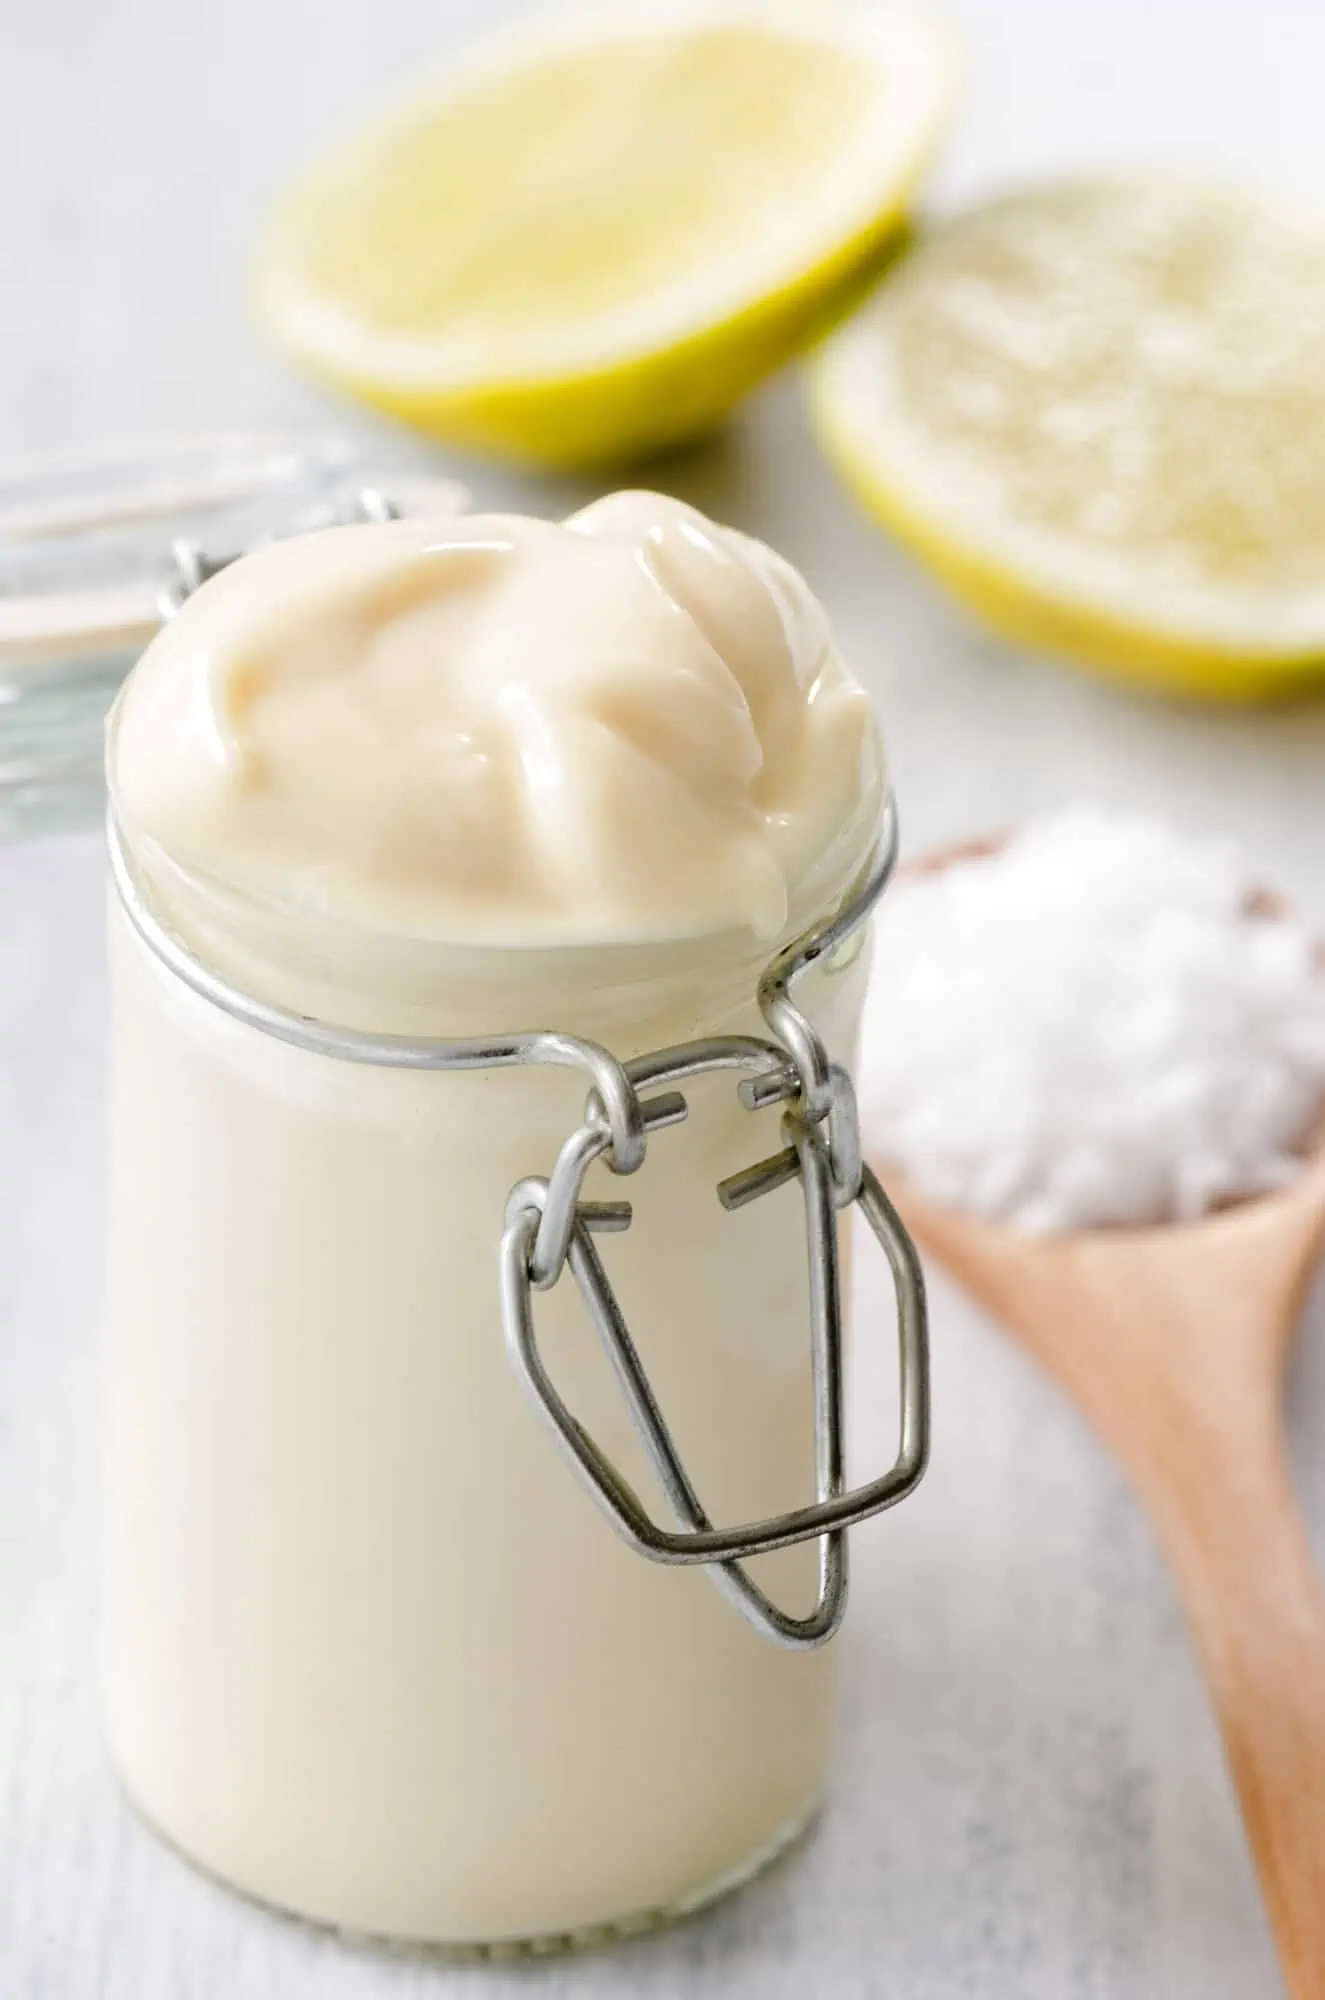 homemade mayonnaise in a jar